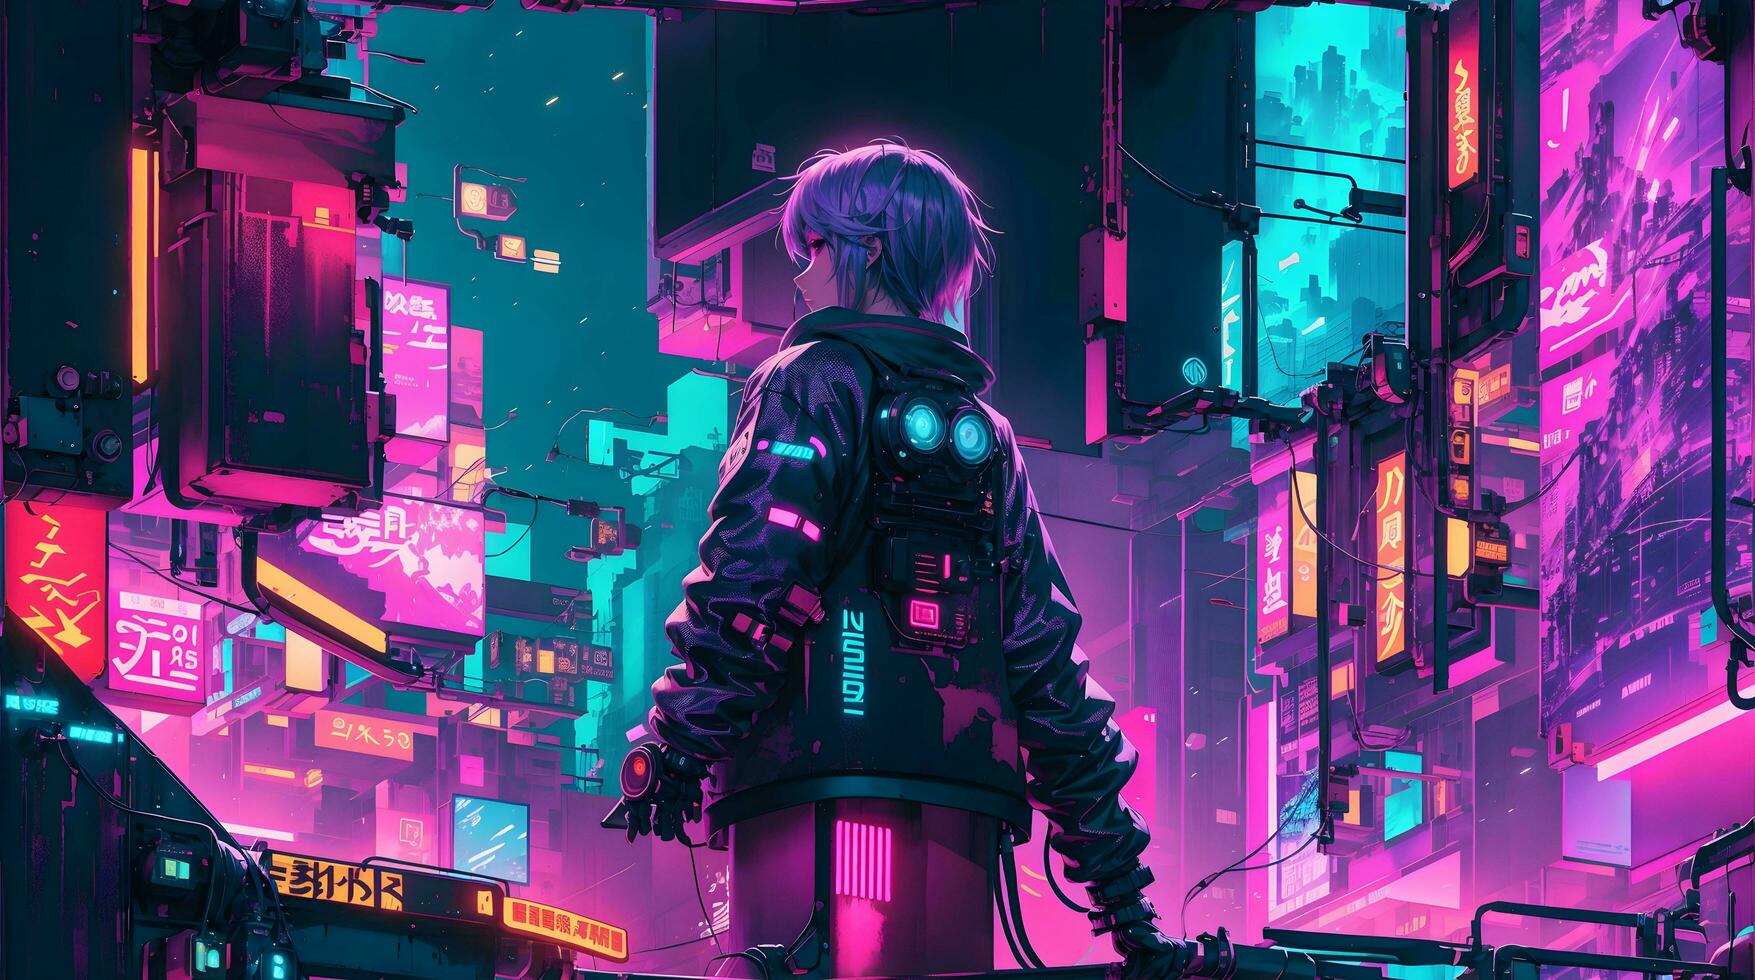 Cyberpunk City Wallpapers - Top Free Cyberpunk City Backgrounds